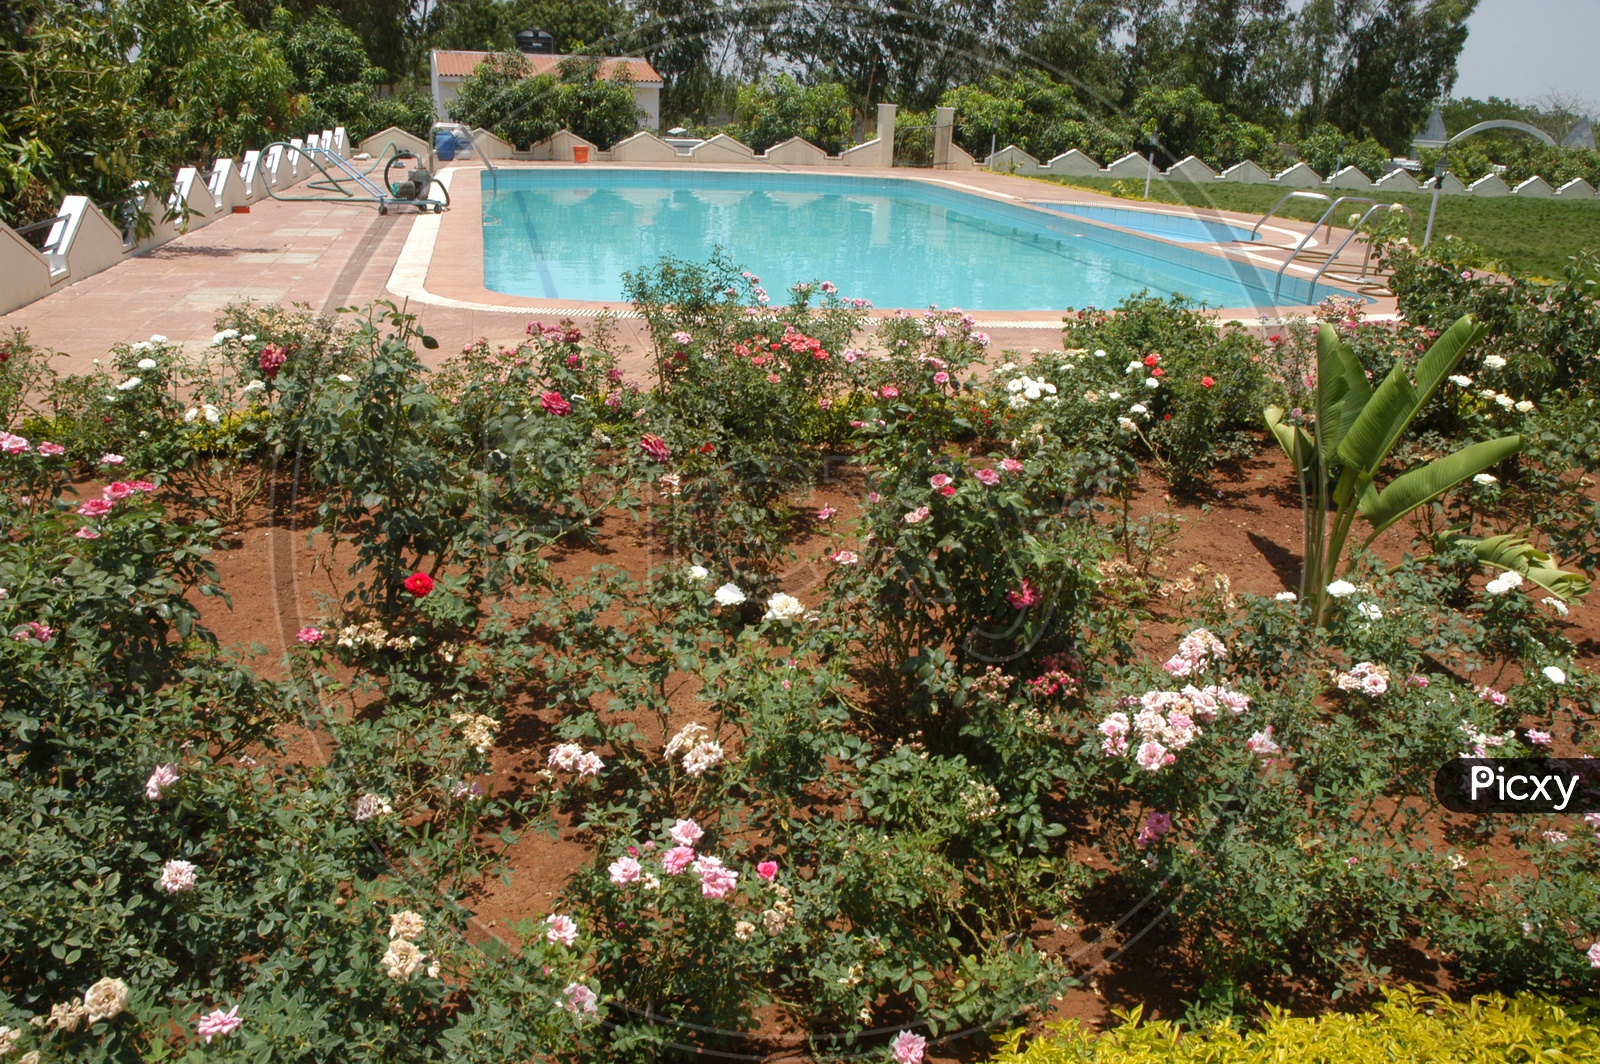 Backyard Swimming pool with rose plants around